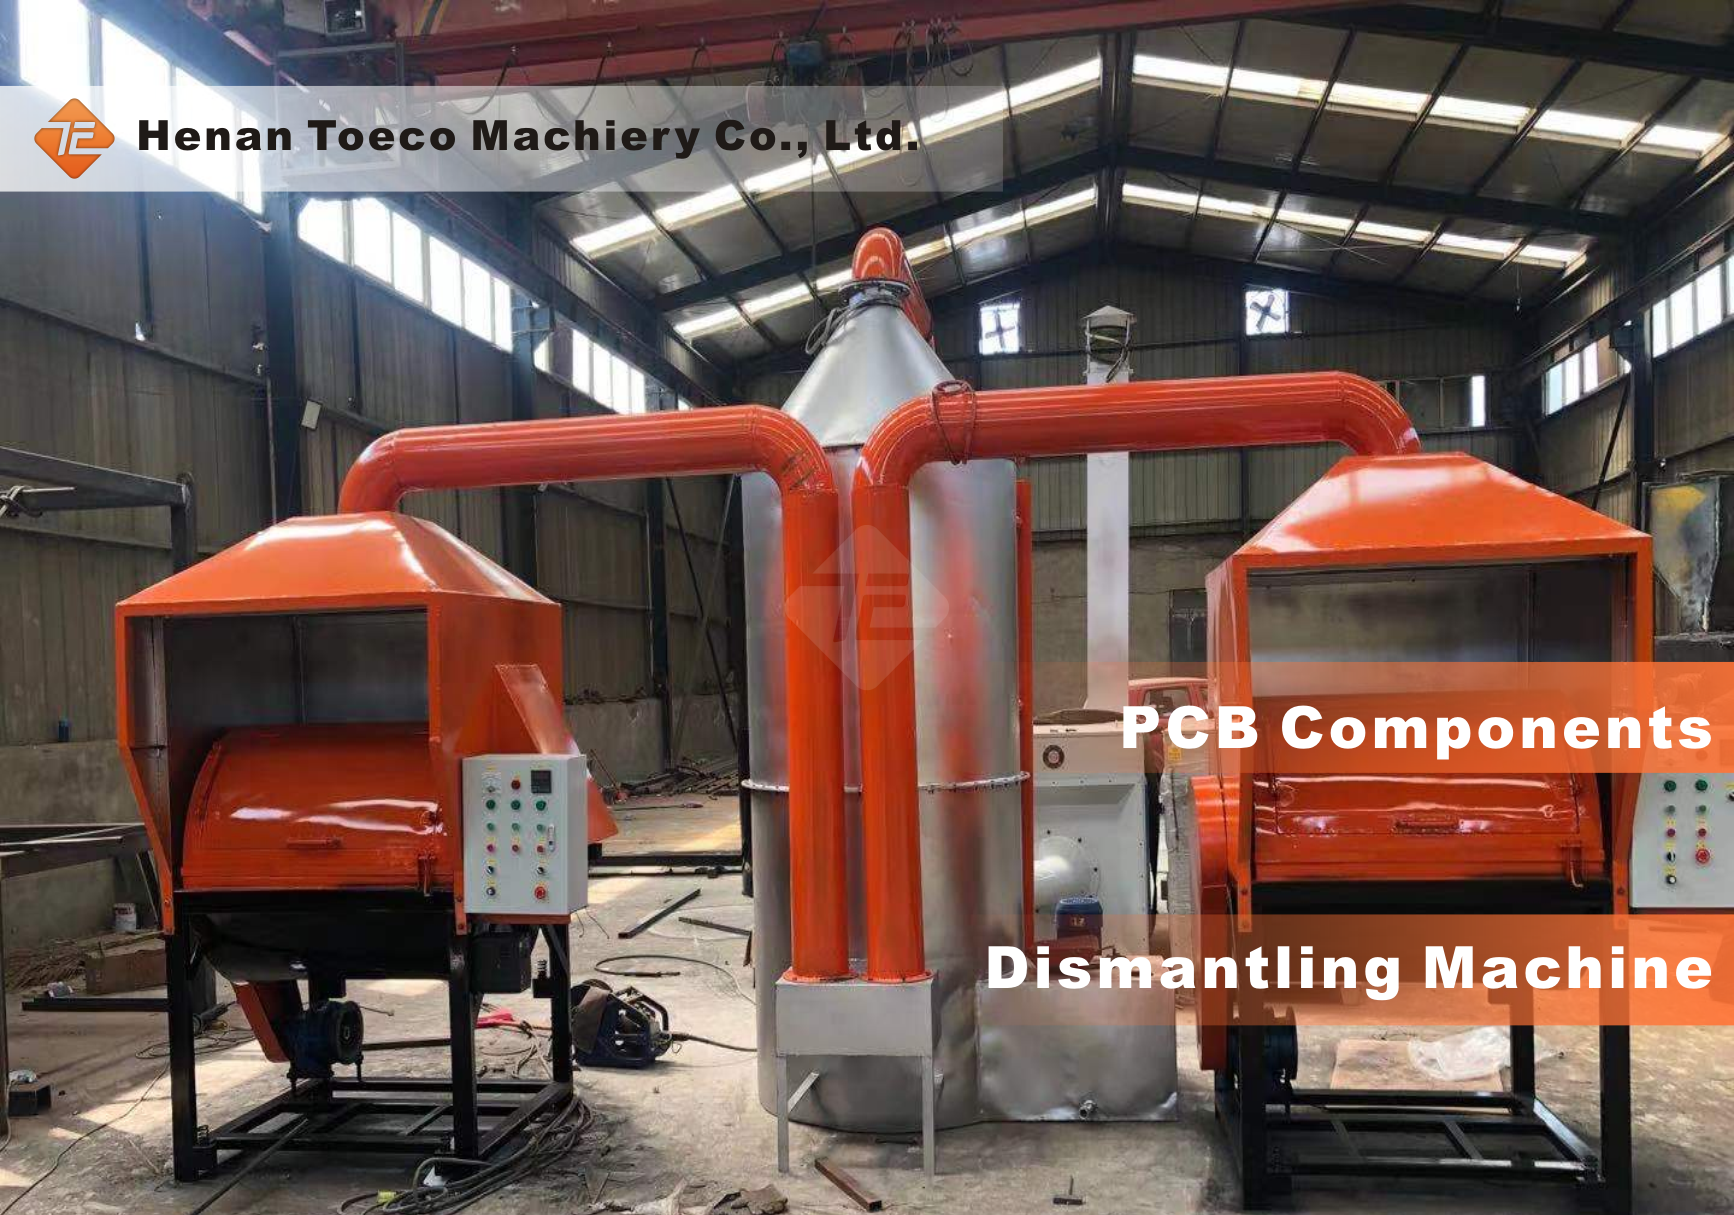 PCB Components Dismantling Machine